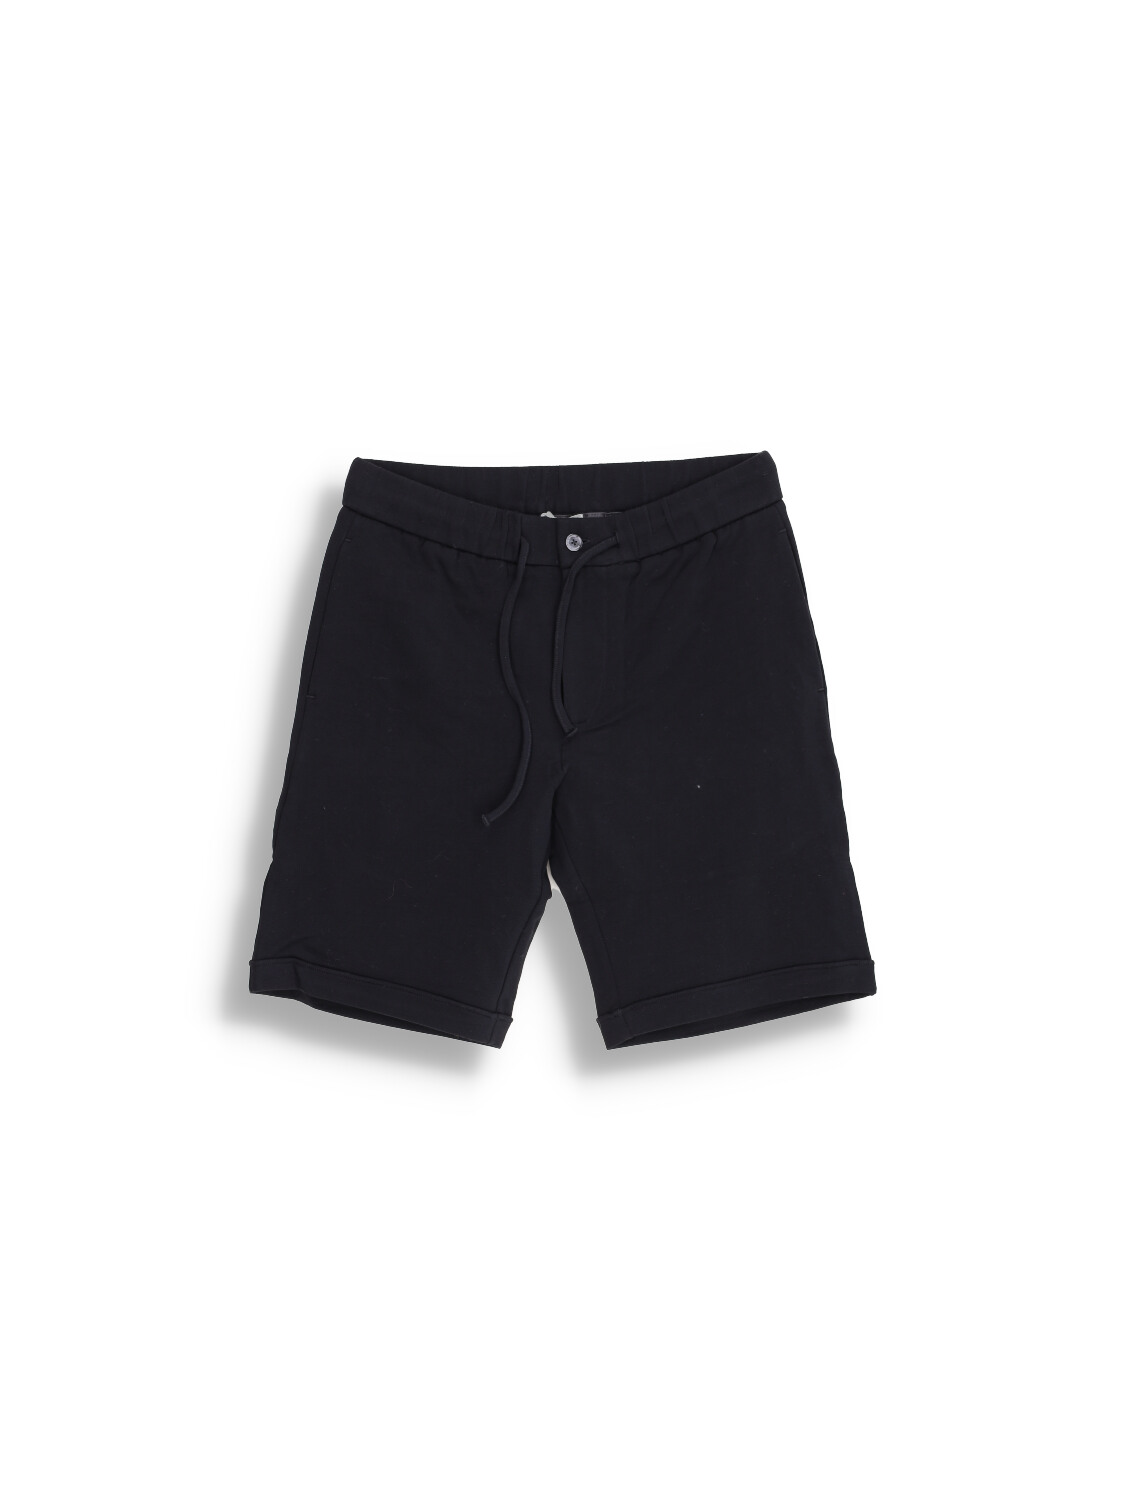 Stefan Brandt Jon Bermuda - Cotton elasticated waistband shorts blue L